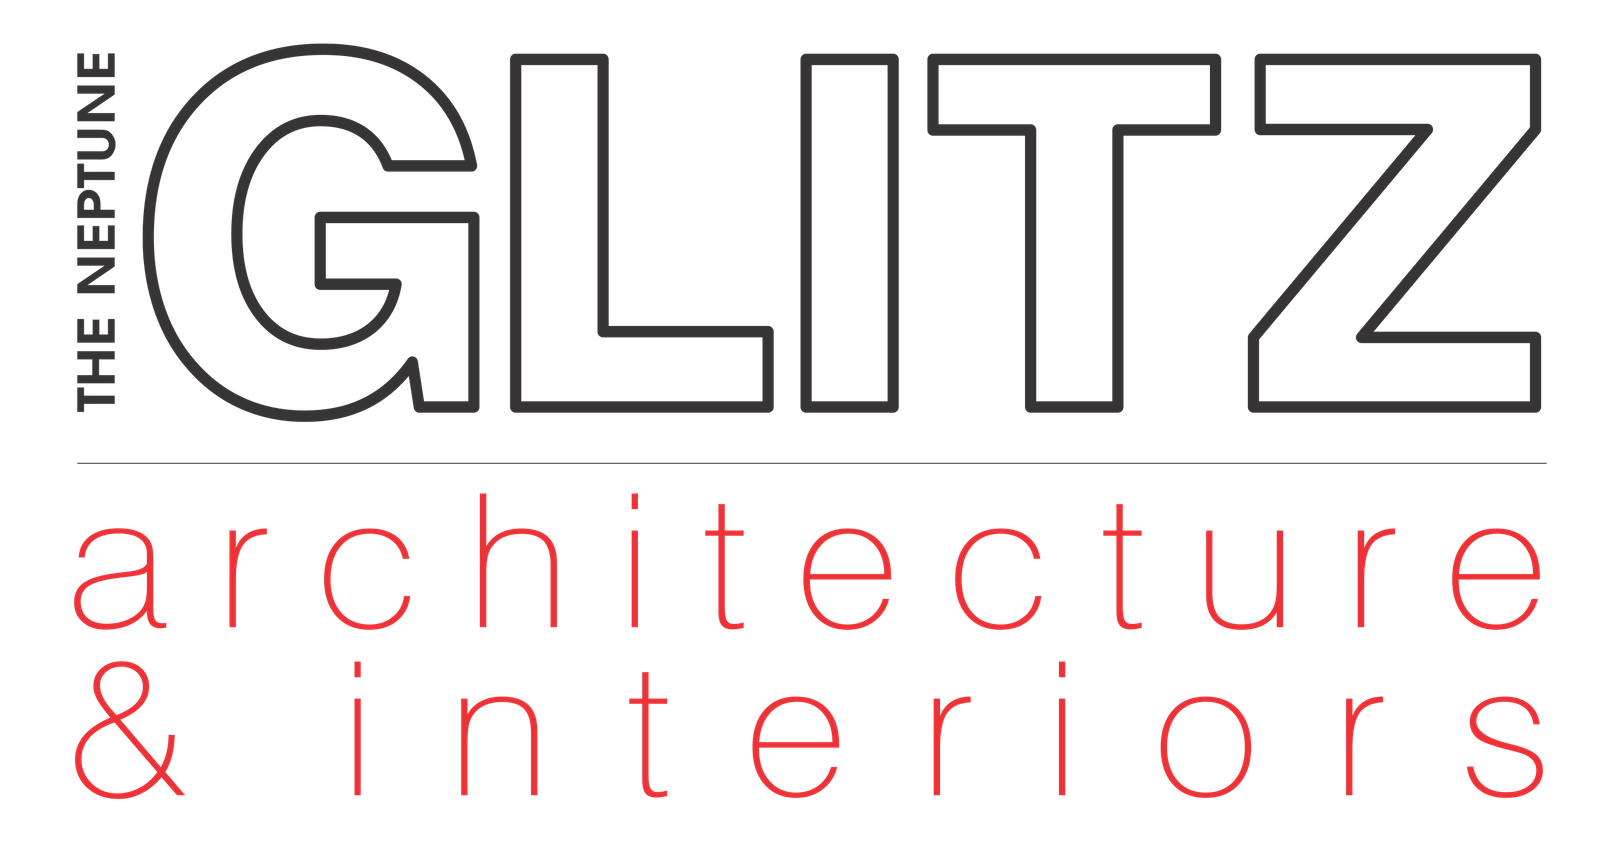 Glitz Logo